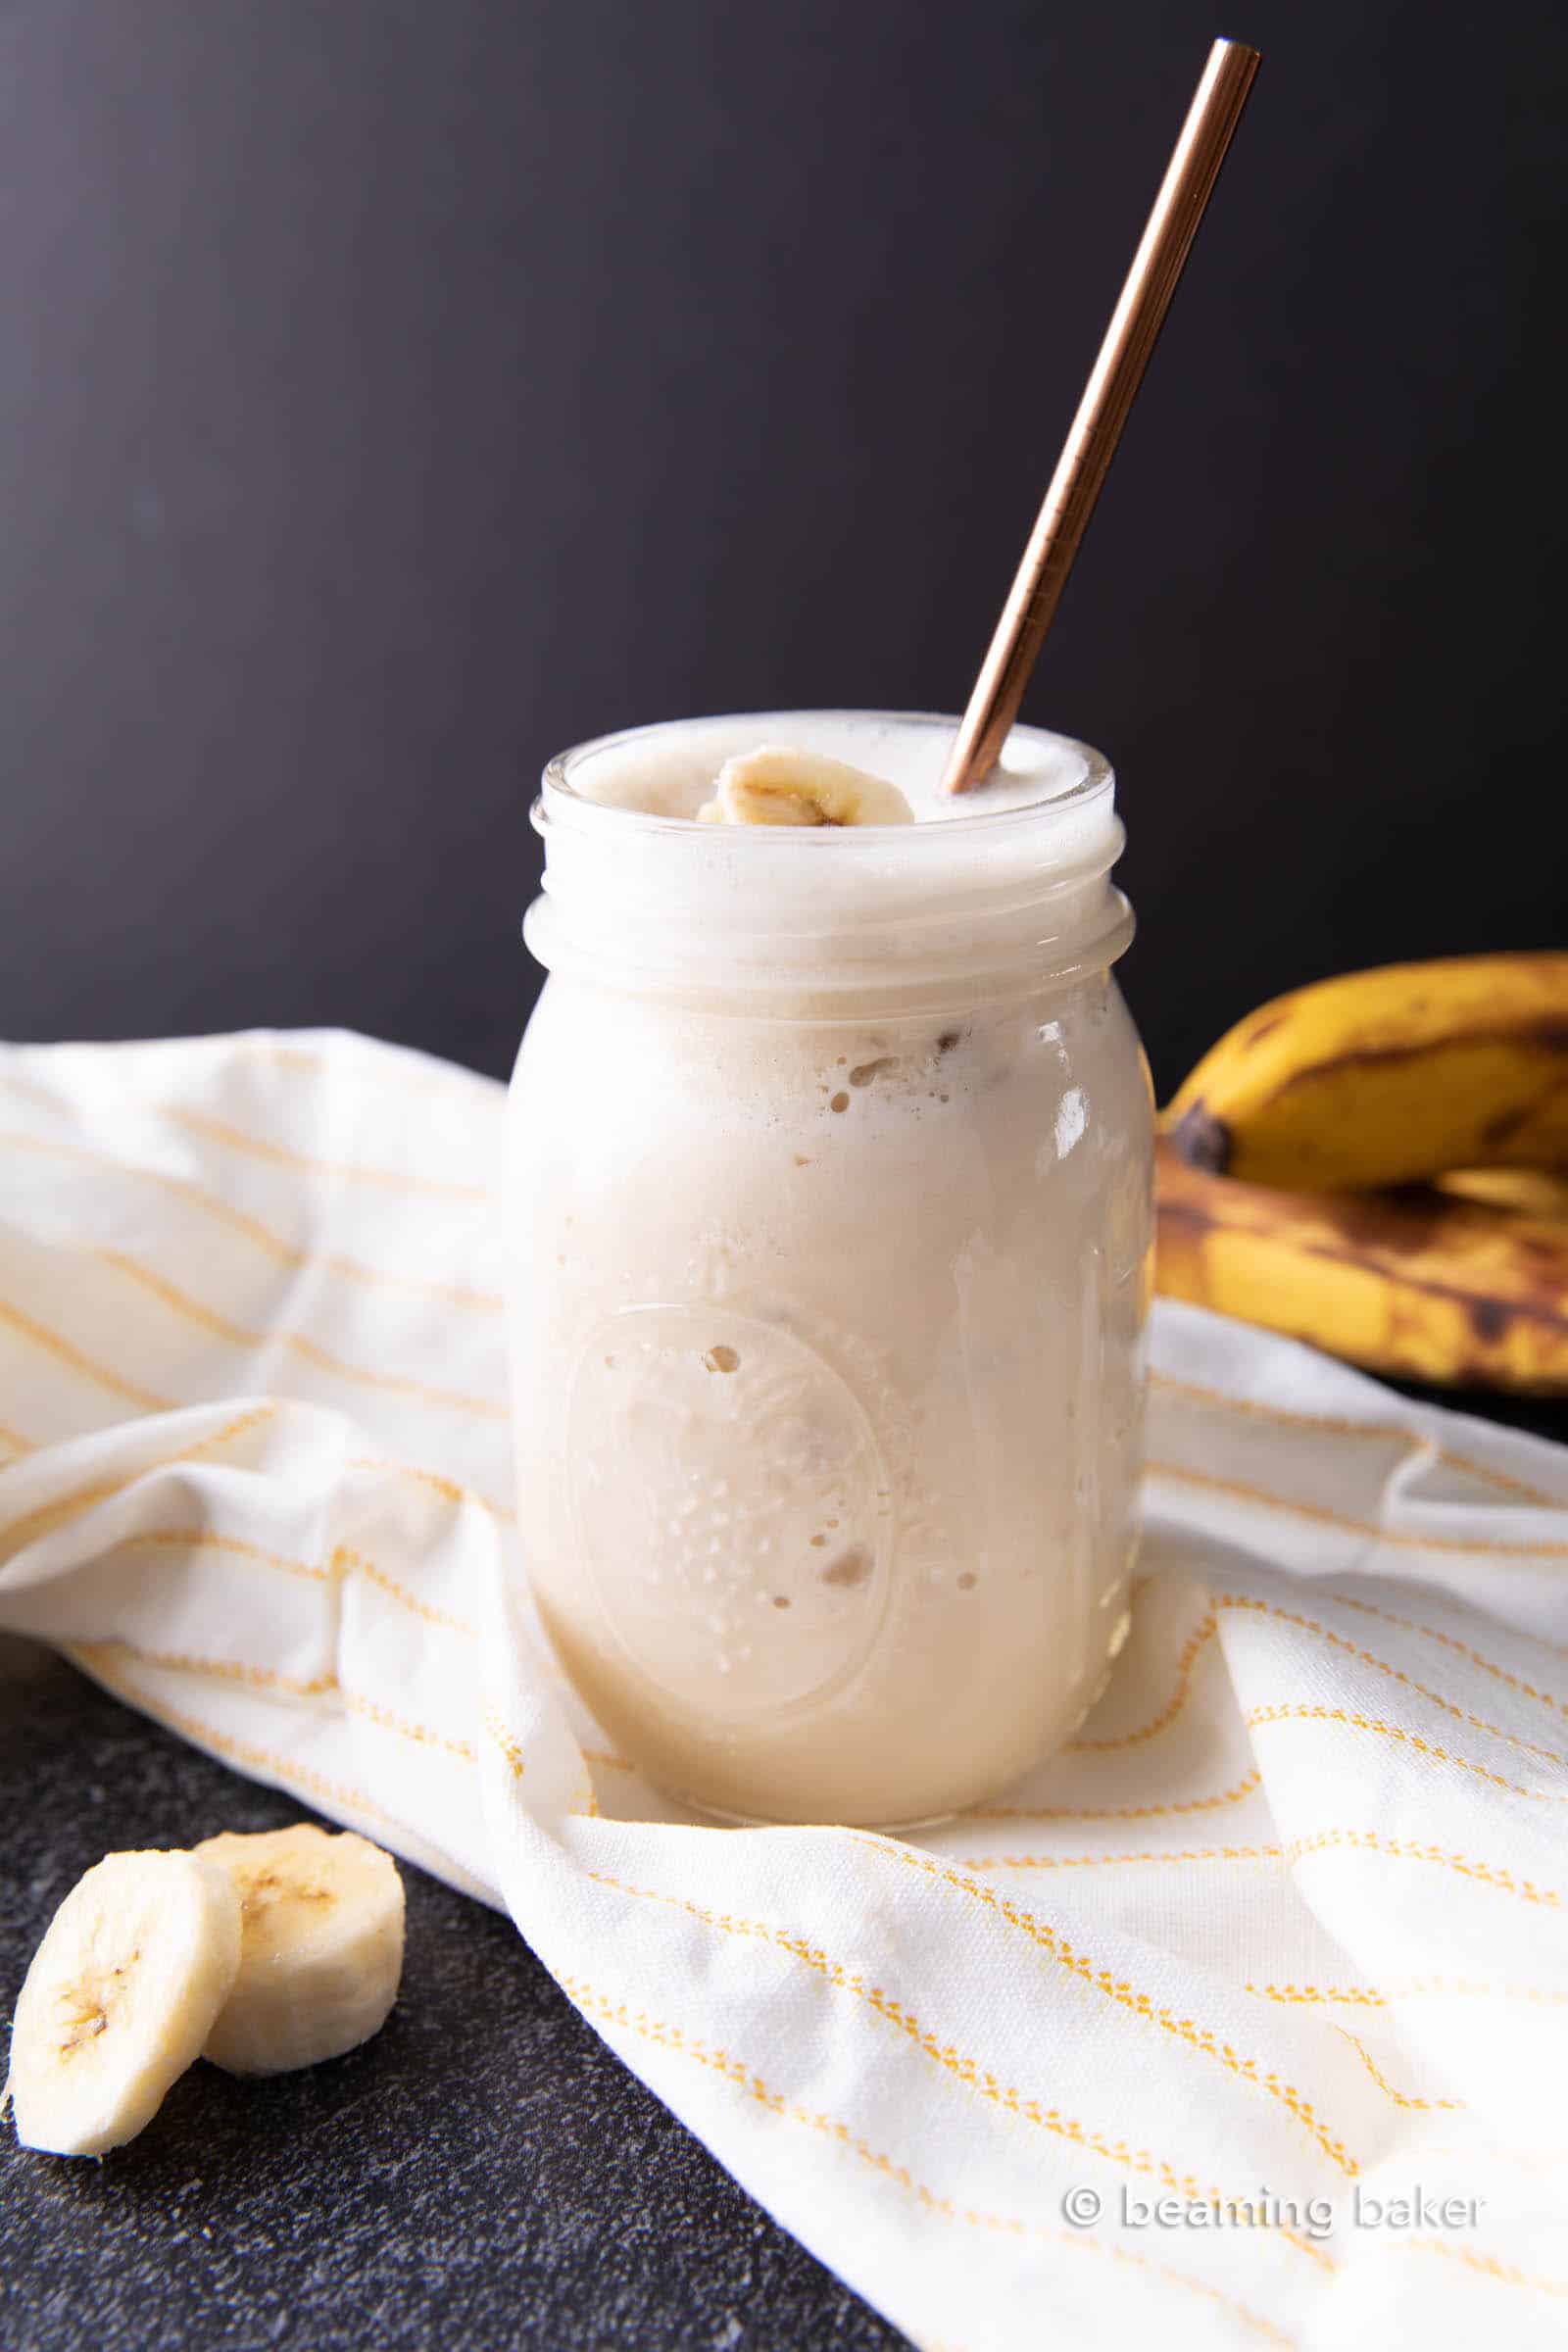 Banana Protein Shake: this 4 ingredient banana protein shake recipe is homemade, easy & delicious! The best banana protein shake—23g of protein per serving, vegan, plant-based, dairy-free. #ProteinShake #Banana #Smoothie #Vegan | Recipe at BeamingBaker.com